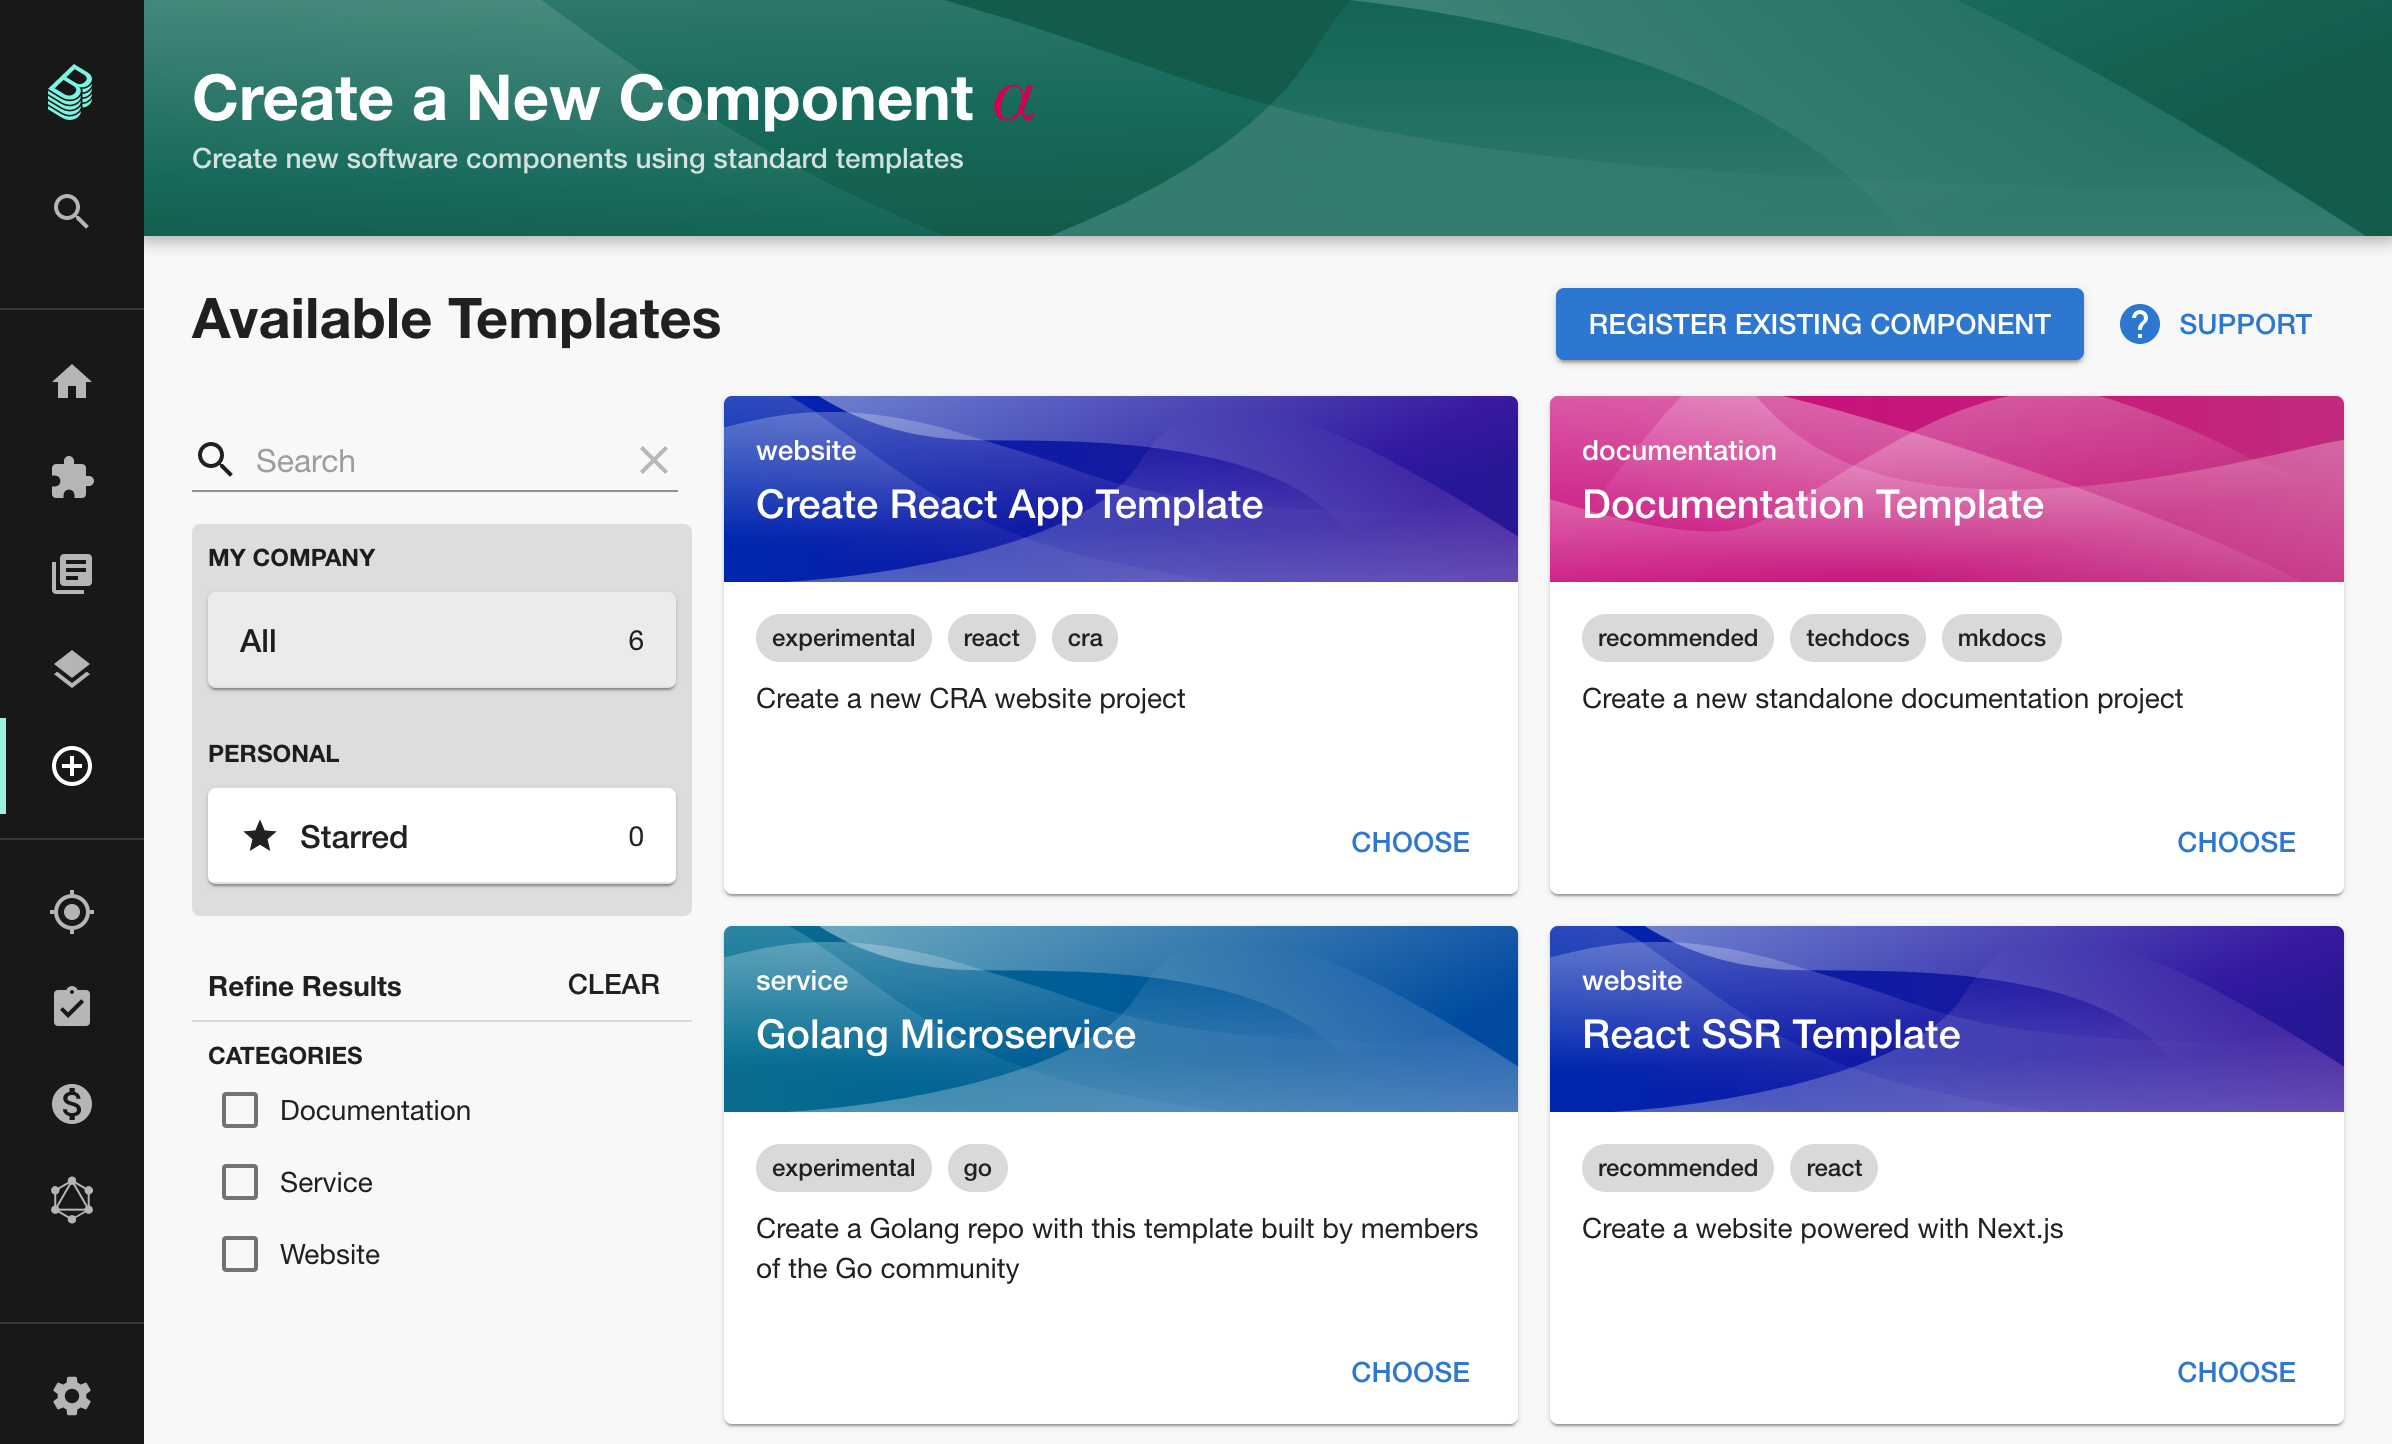 a list of templates unside backstage: Create React App Template, Docs template, Golang template etc.